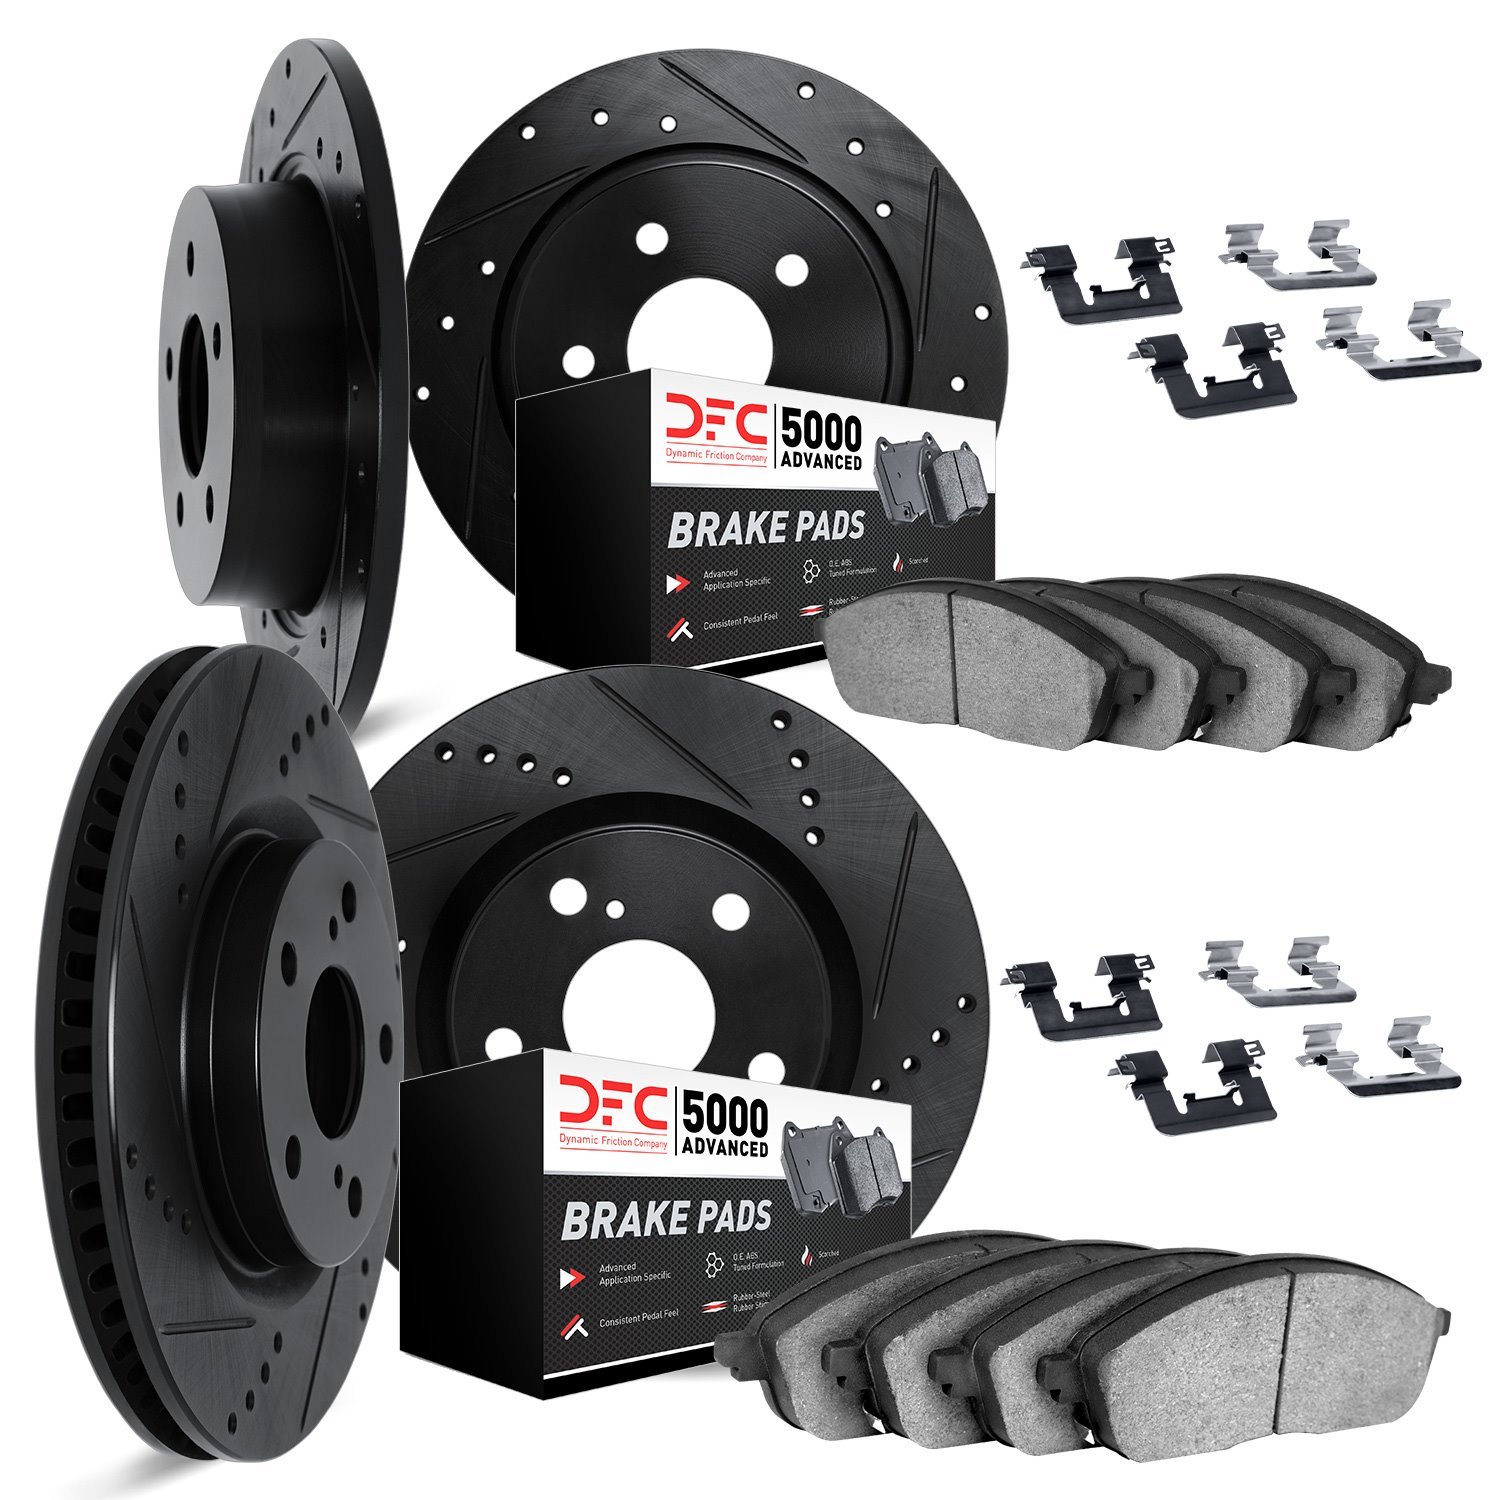 8514-42004 Drilled/Slotted Brake Rotors w/5000 Advanced Brake Pads Kit & Hardware [Black], 1999-2002 Mopar, Position: Front and